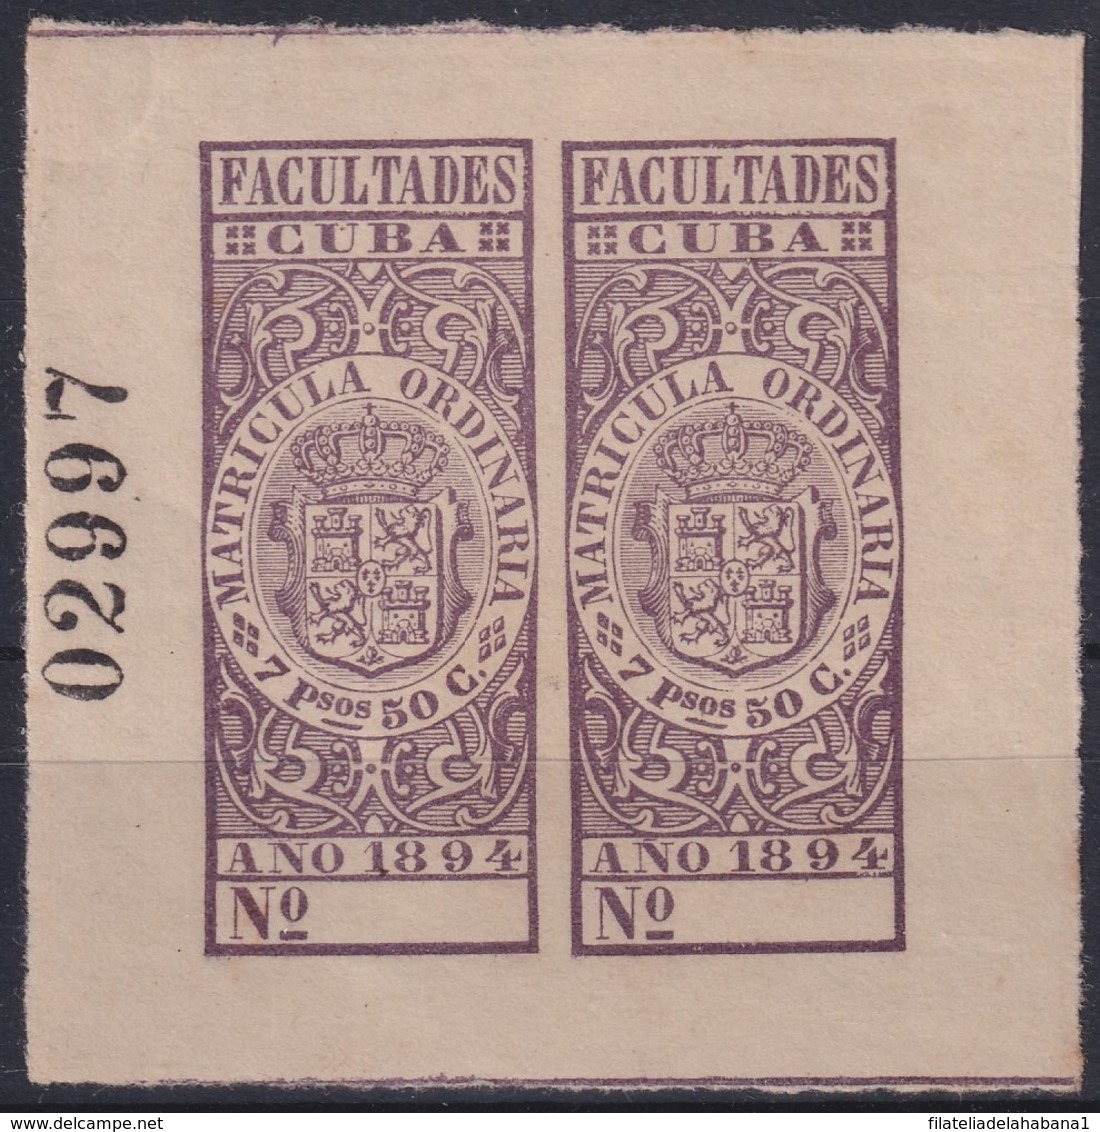 INS-10 CUBA SPAIN REVENUE FACULTADES 1894 UNUSED PUBLIC INSTRUCTION. - Timbres-taxe